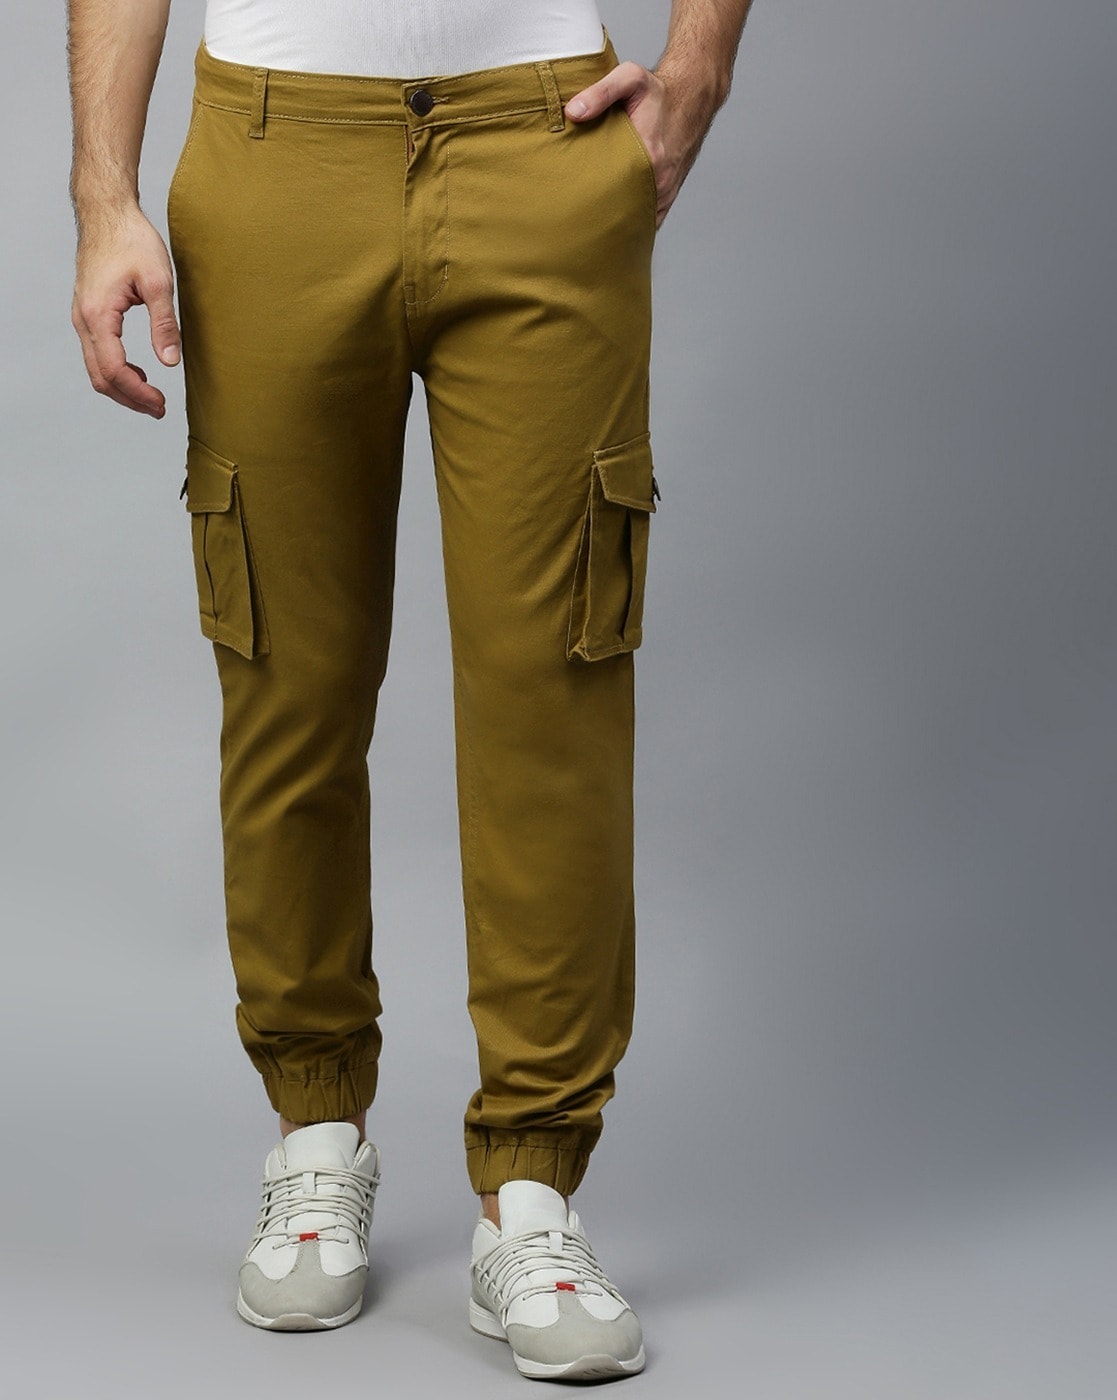 Jack  Jones Casual Trousers  Buy Jack  Jones Yellow Mid Rise Regular Fit  Pants 28 OnlineNykaa fashion